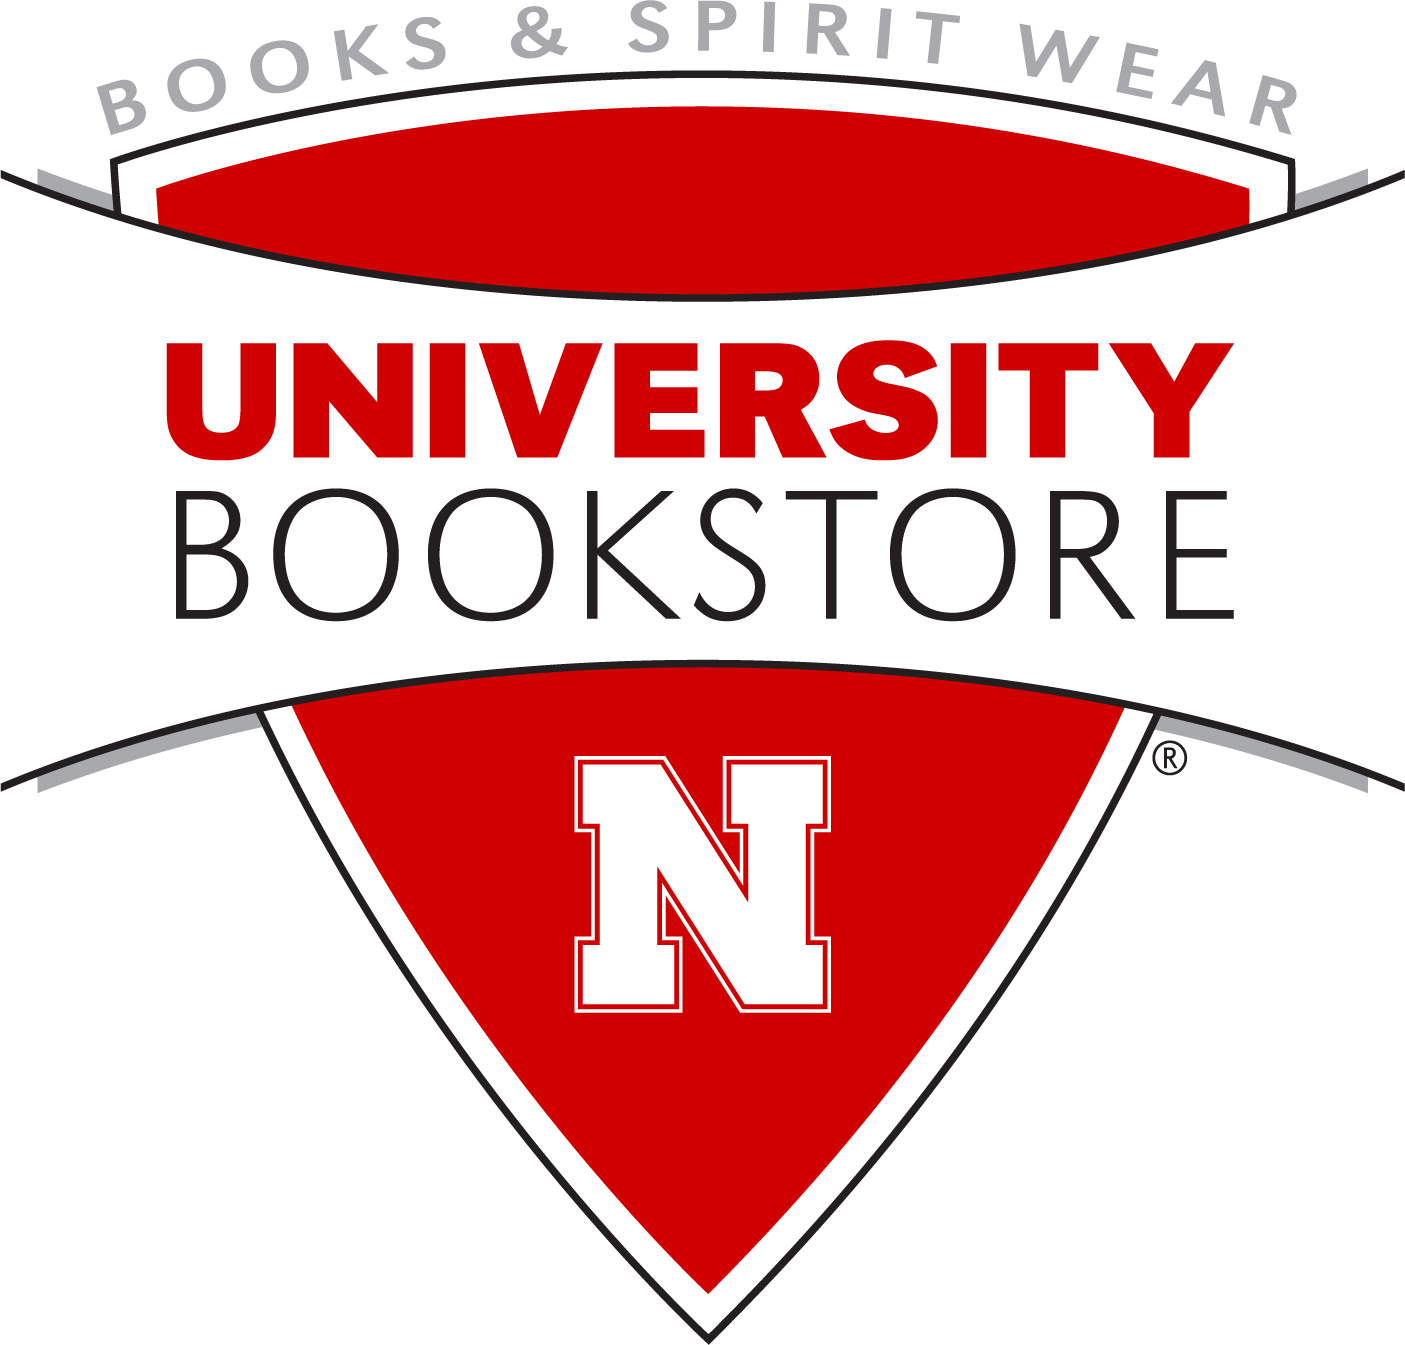 University Bookstore Logo.